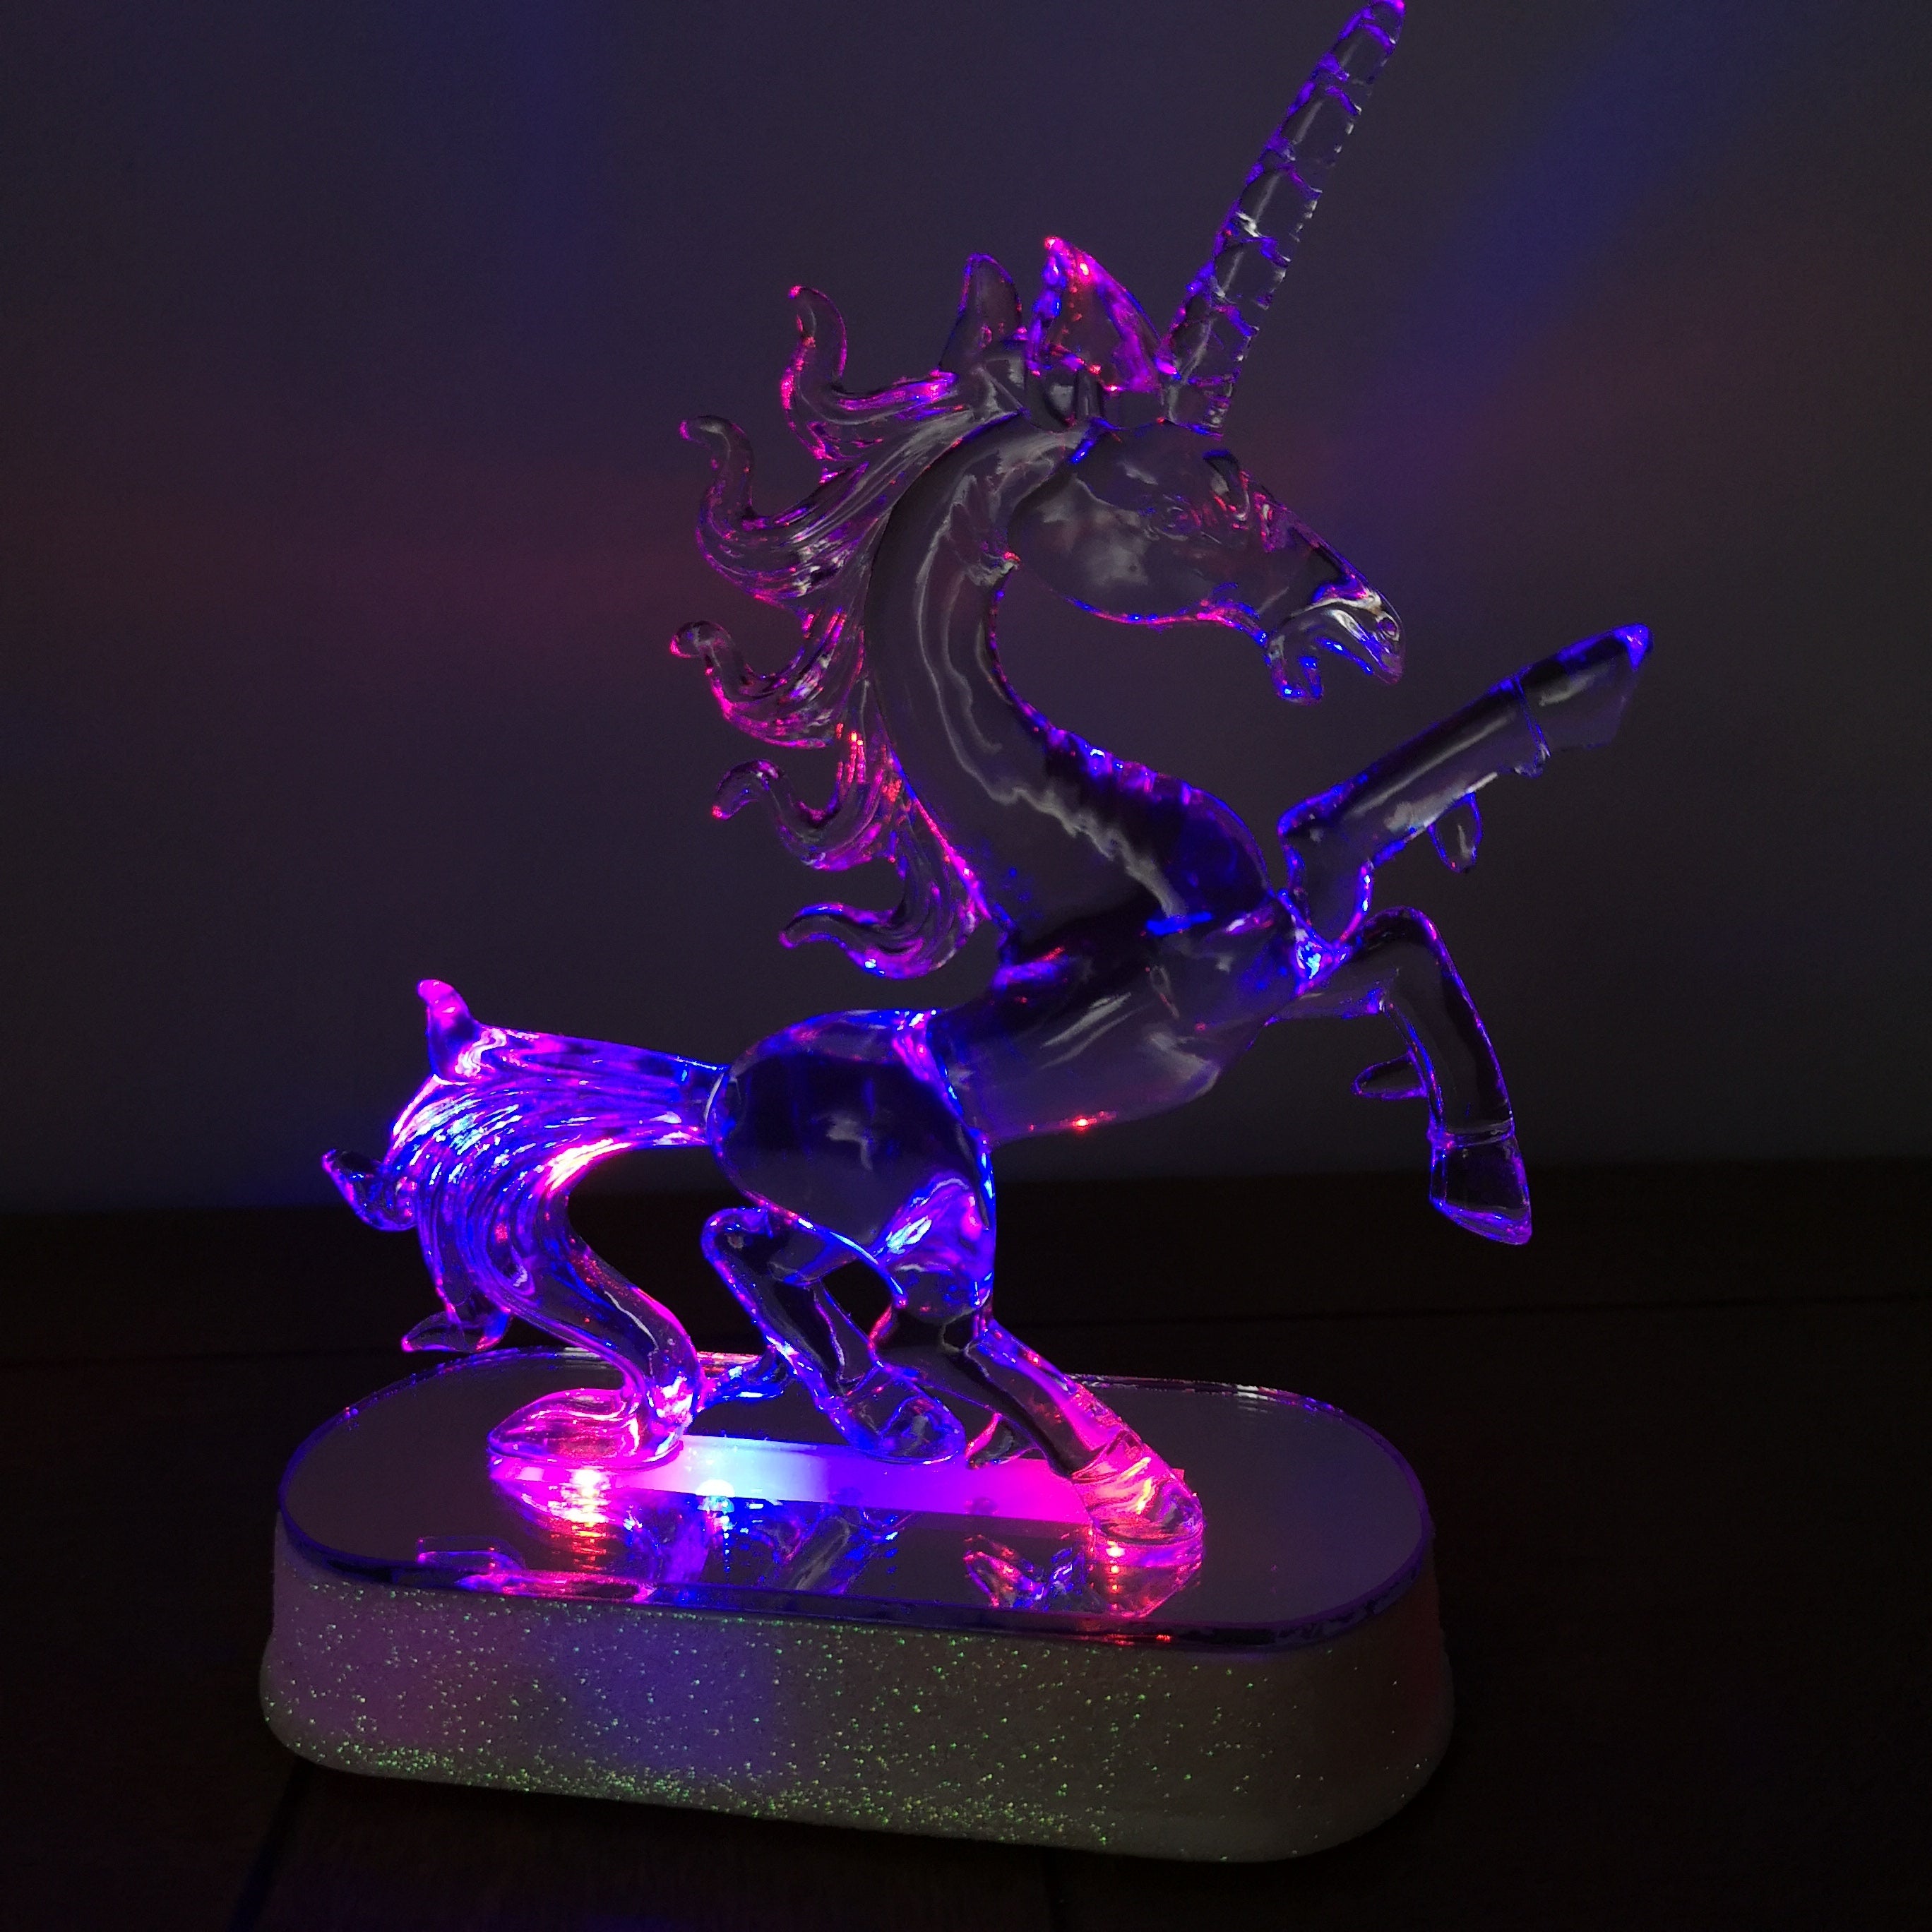 18cm Battery Operated Colour Changing Acrylic LED Unicorn Christmas Decoration